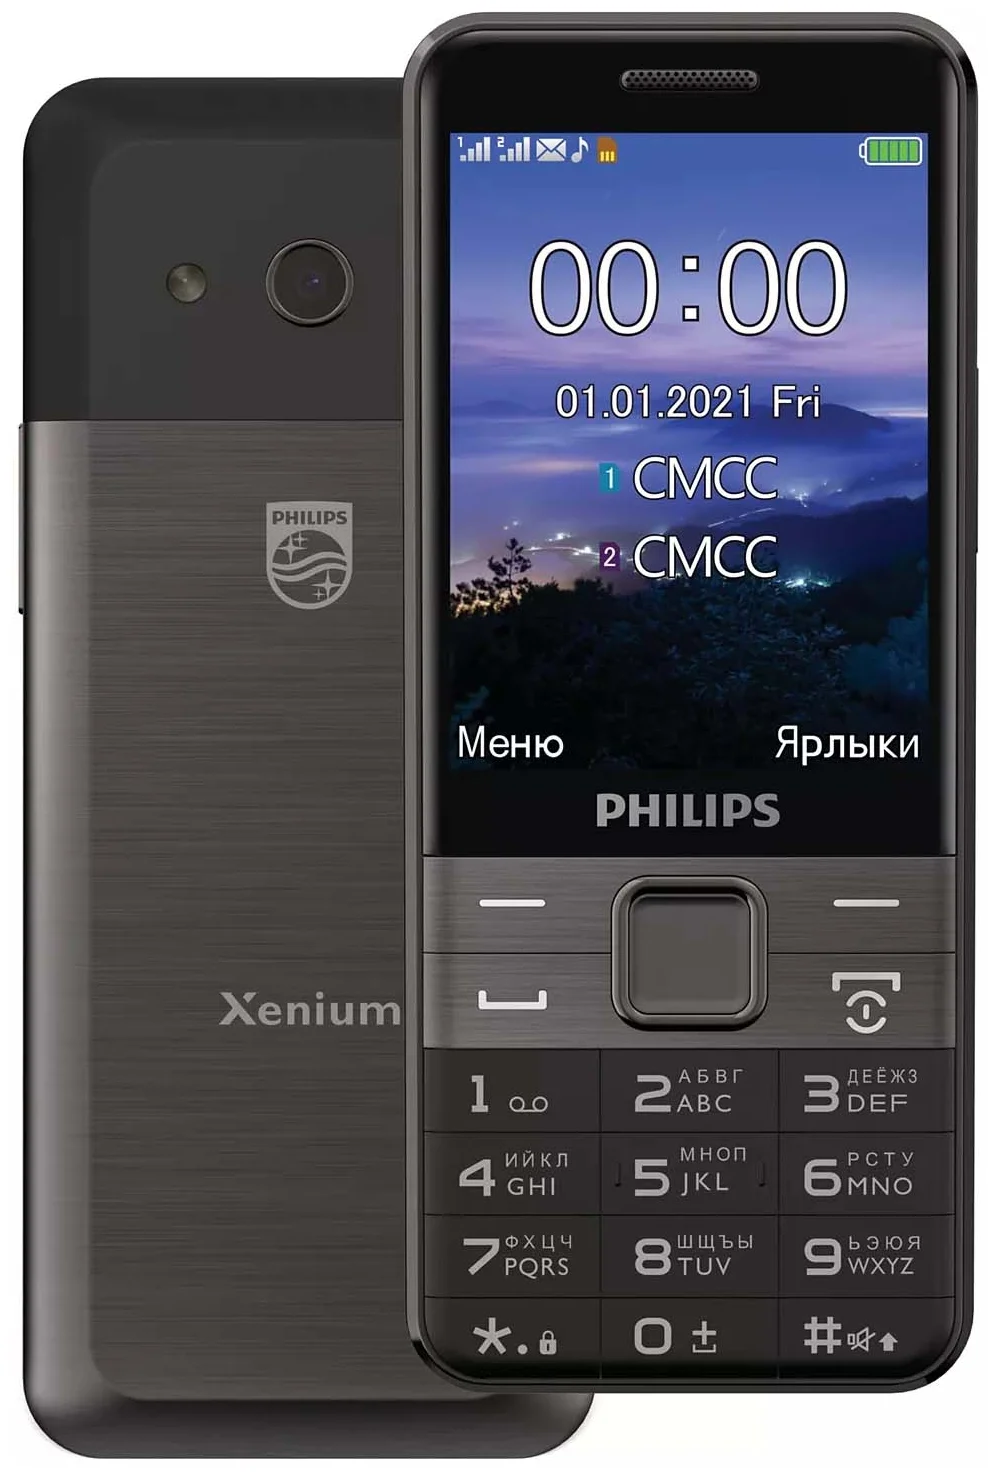 Philips Xenium E590 - экран: 3.2" (320×240)